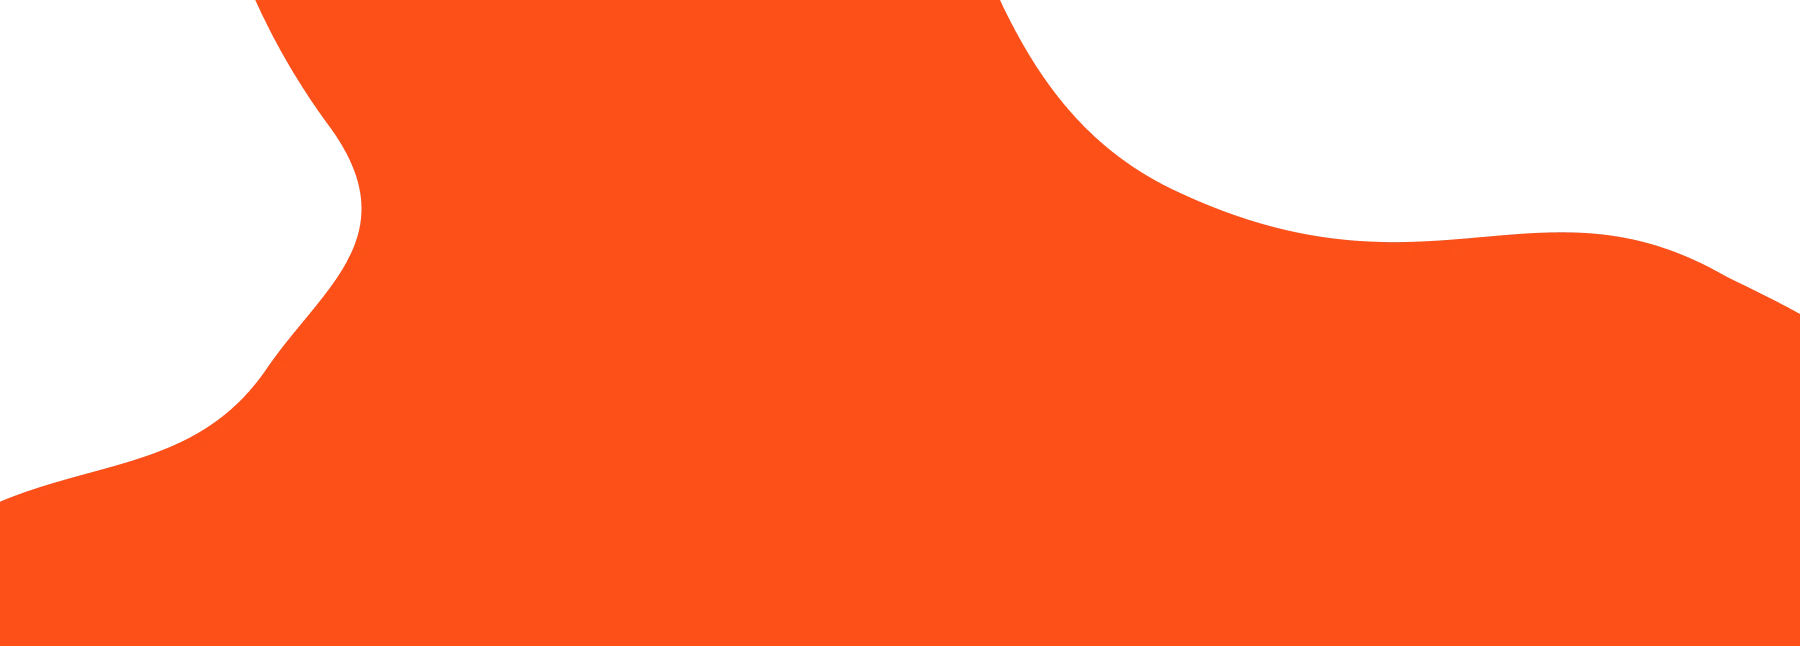 Abstract orange blob.